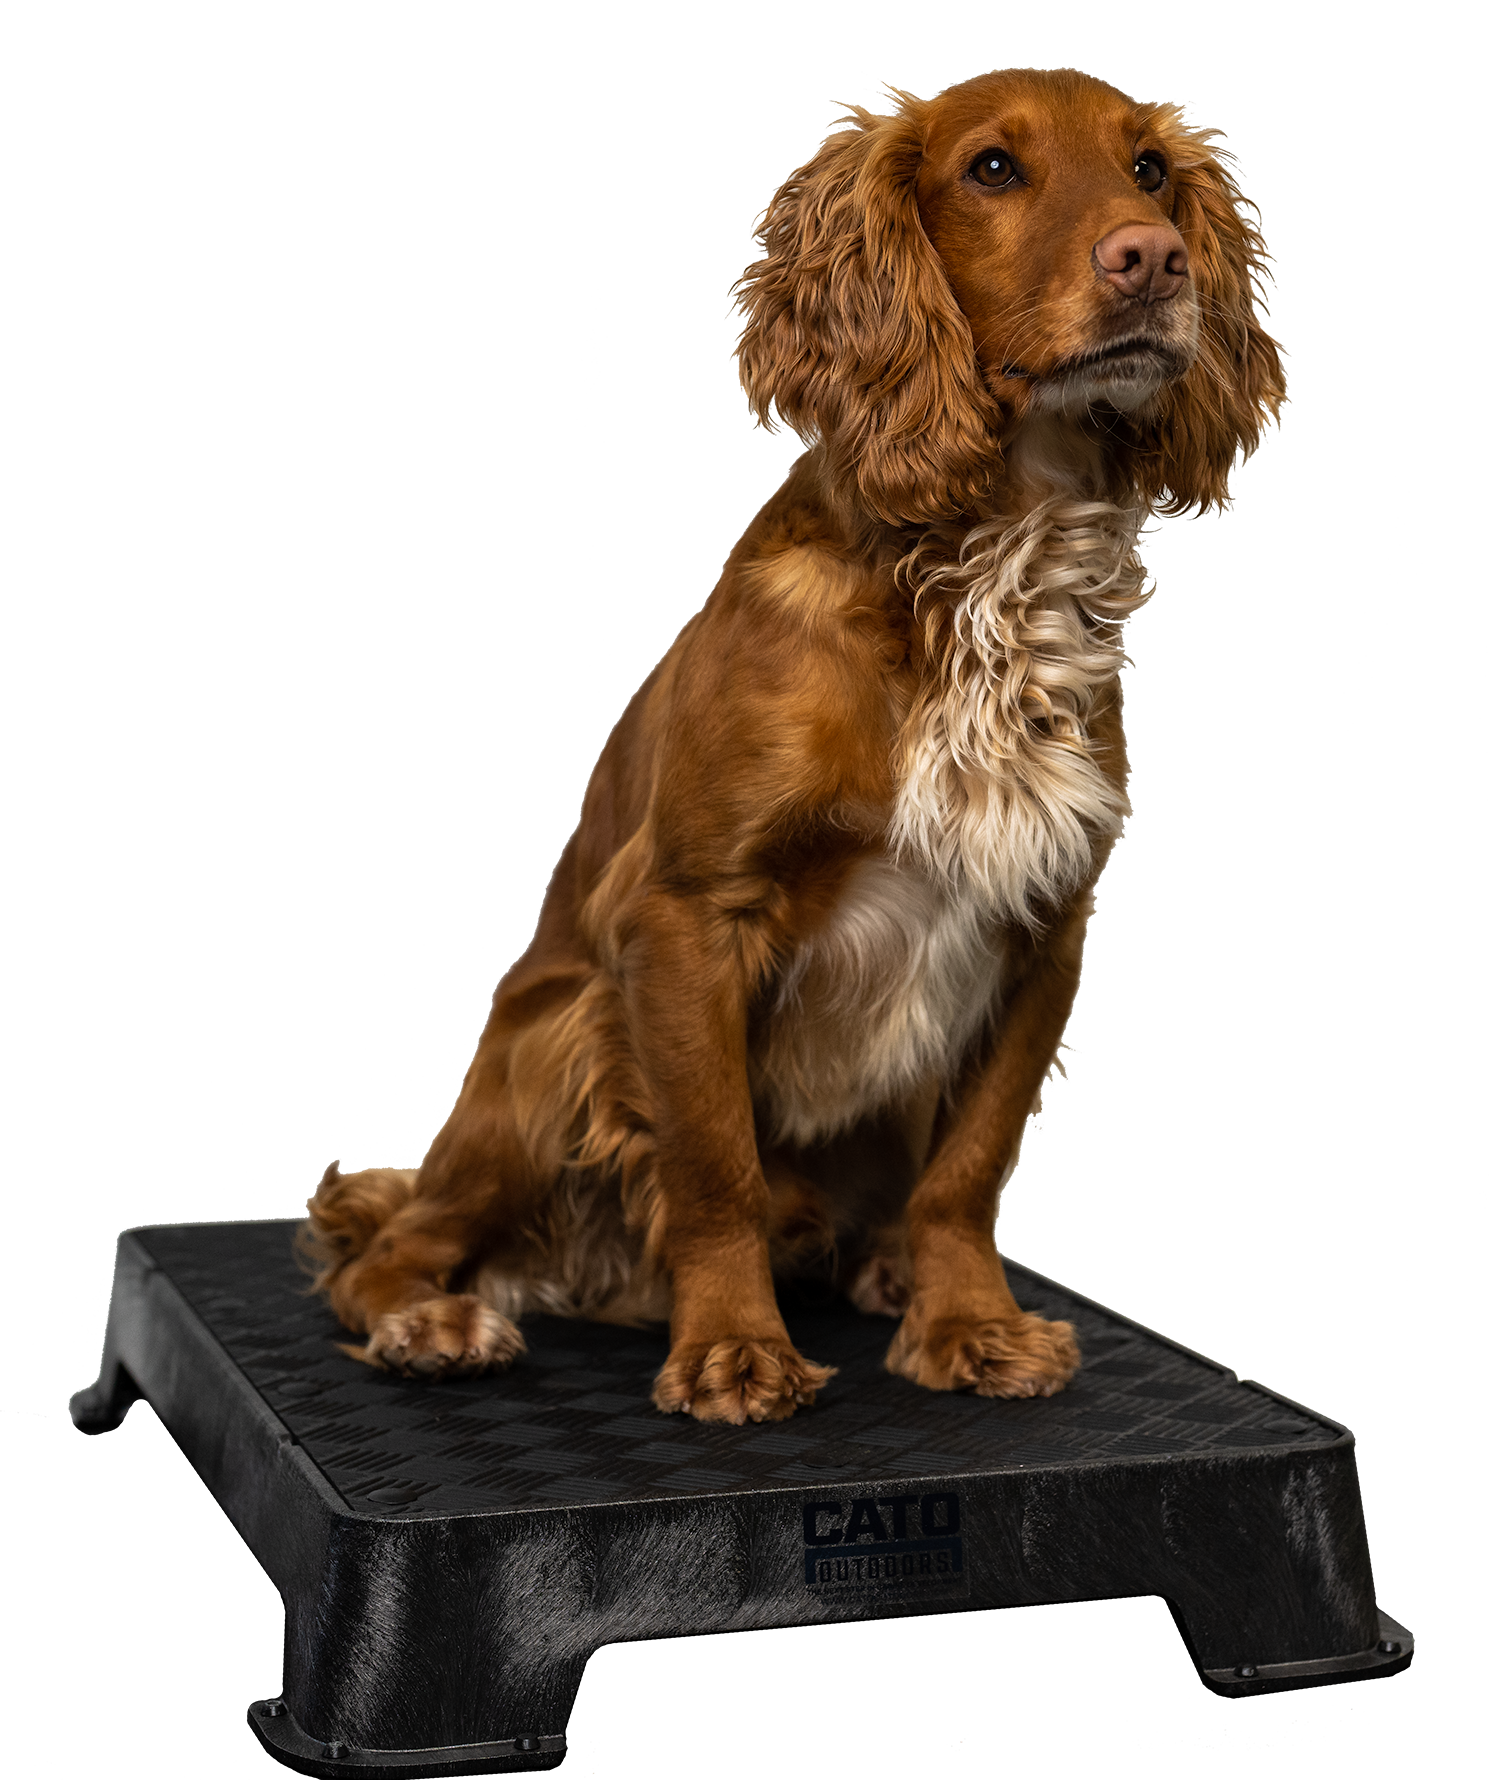 Pet Supplies : Cato Board - Dog Training Platform (Black, Turf Surface) 